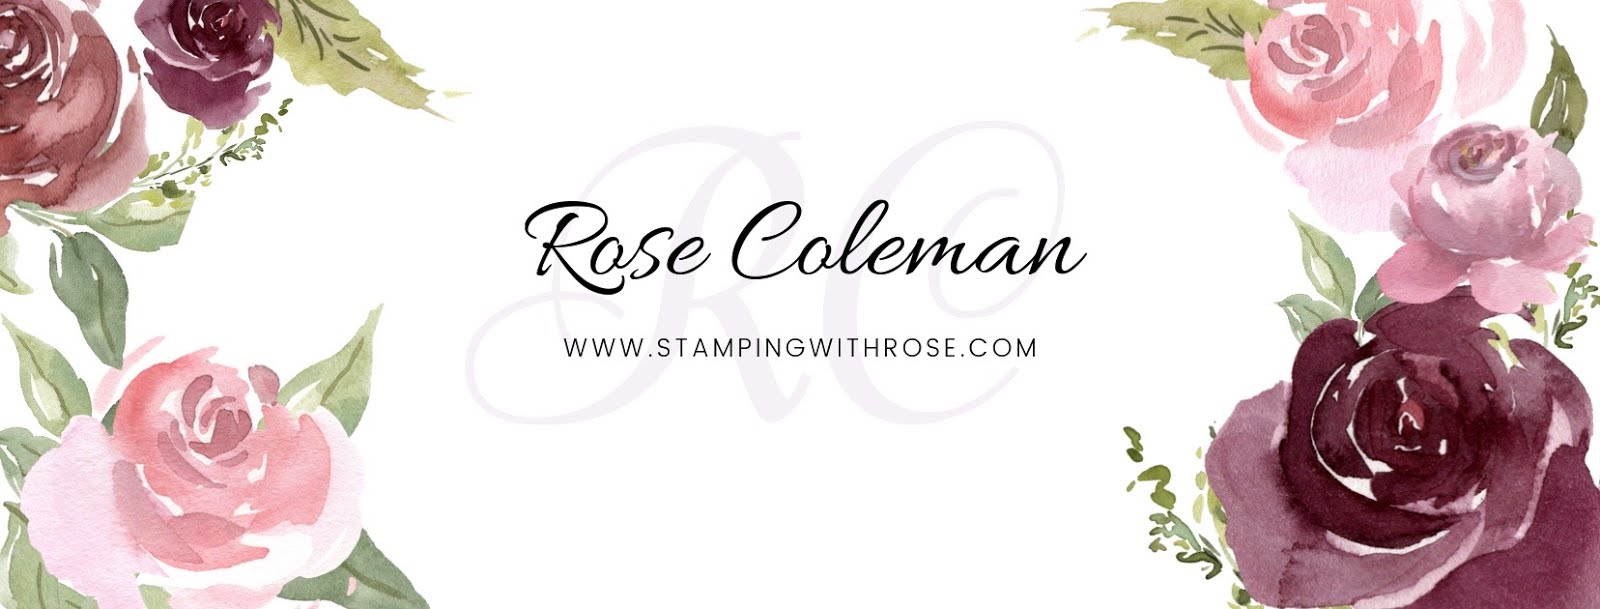 rosecoleman.com